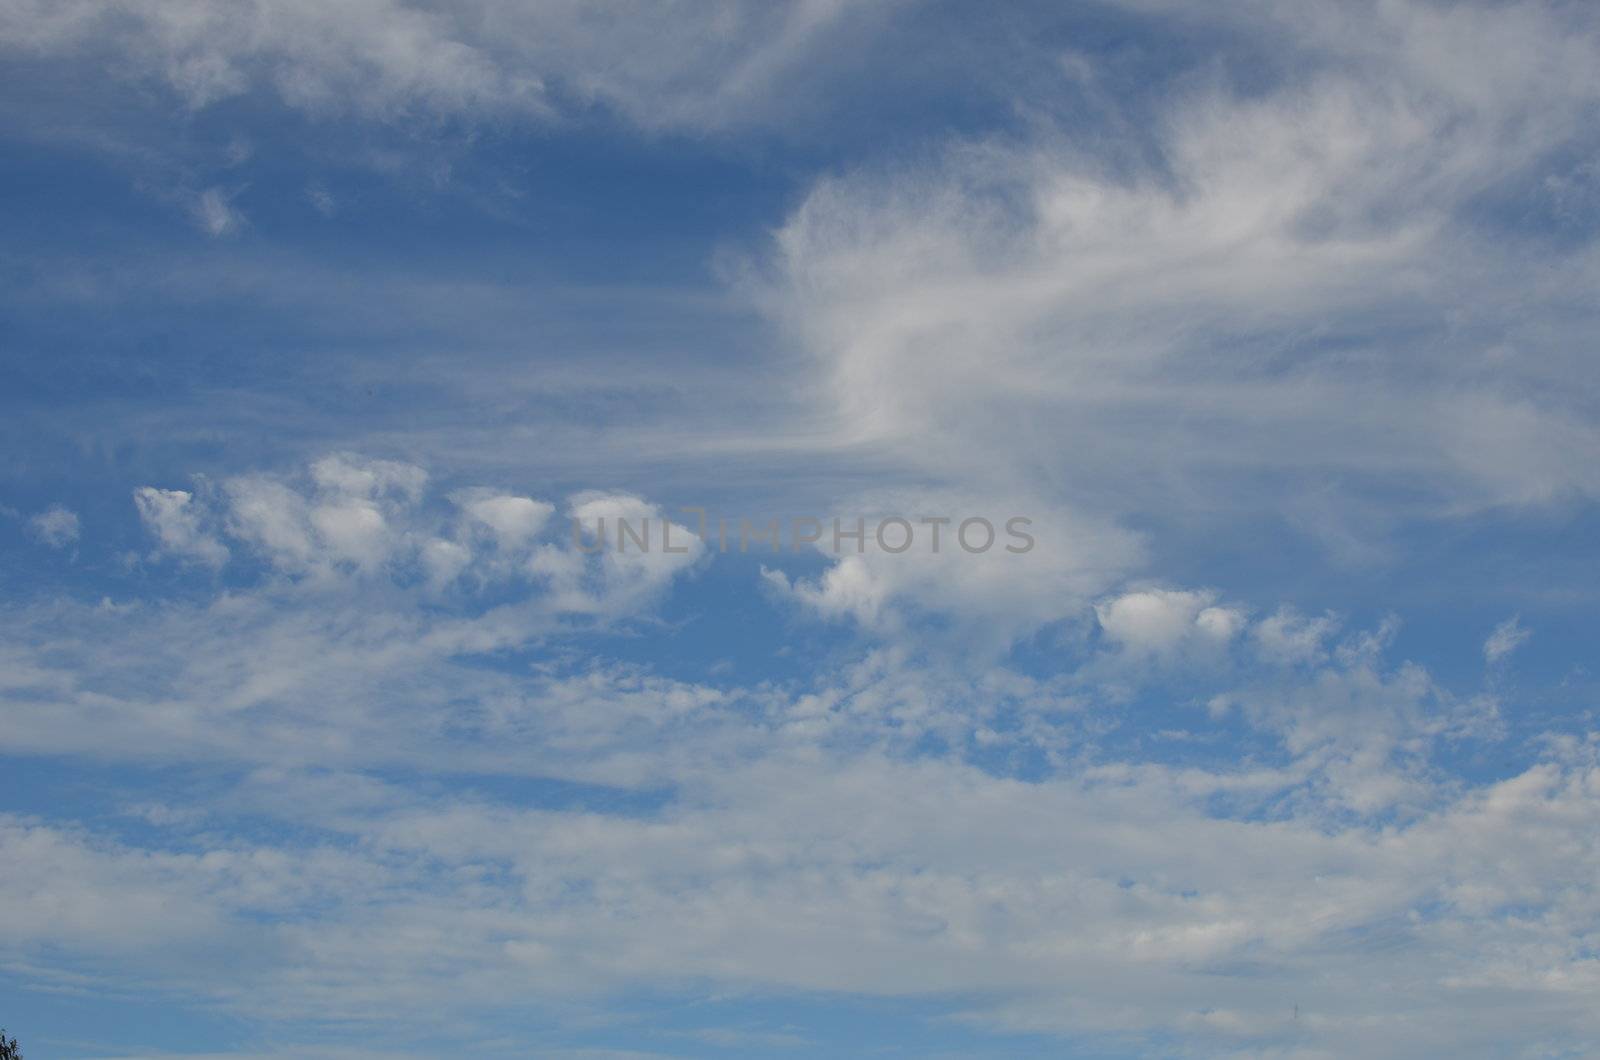 Cloud patterns by ianmck